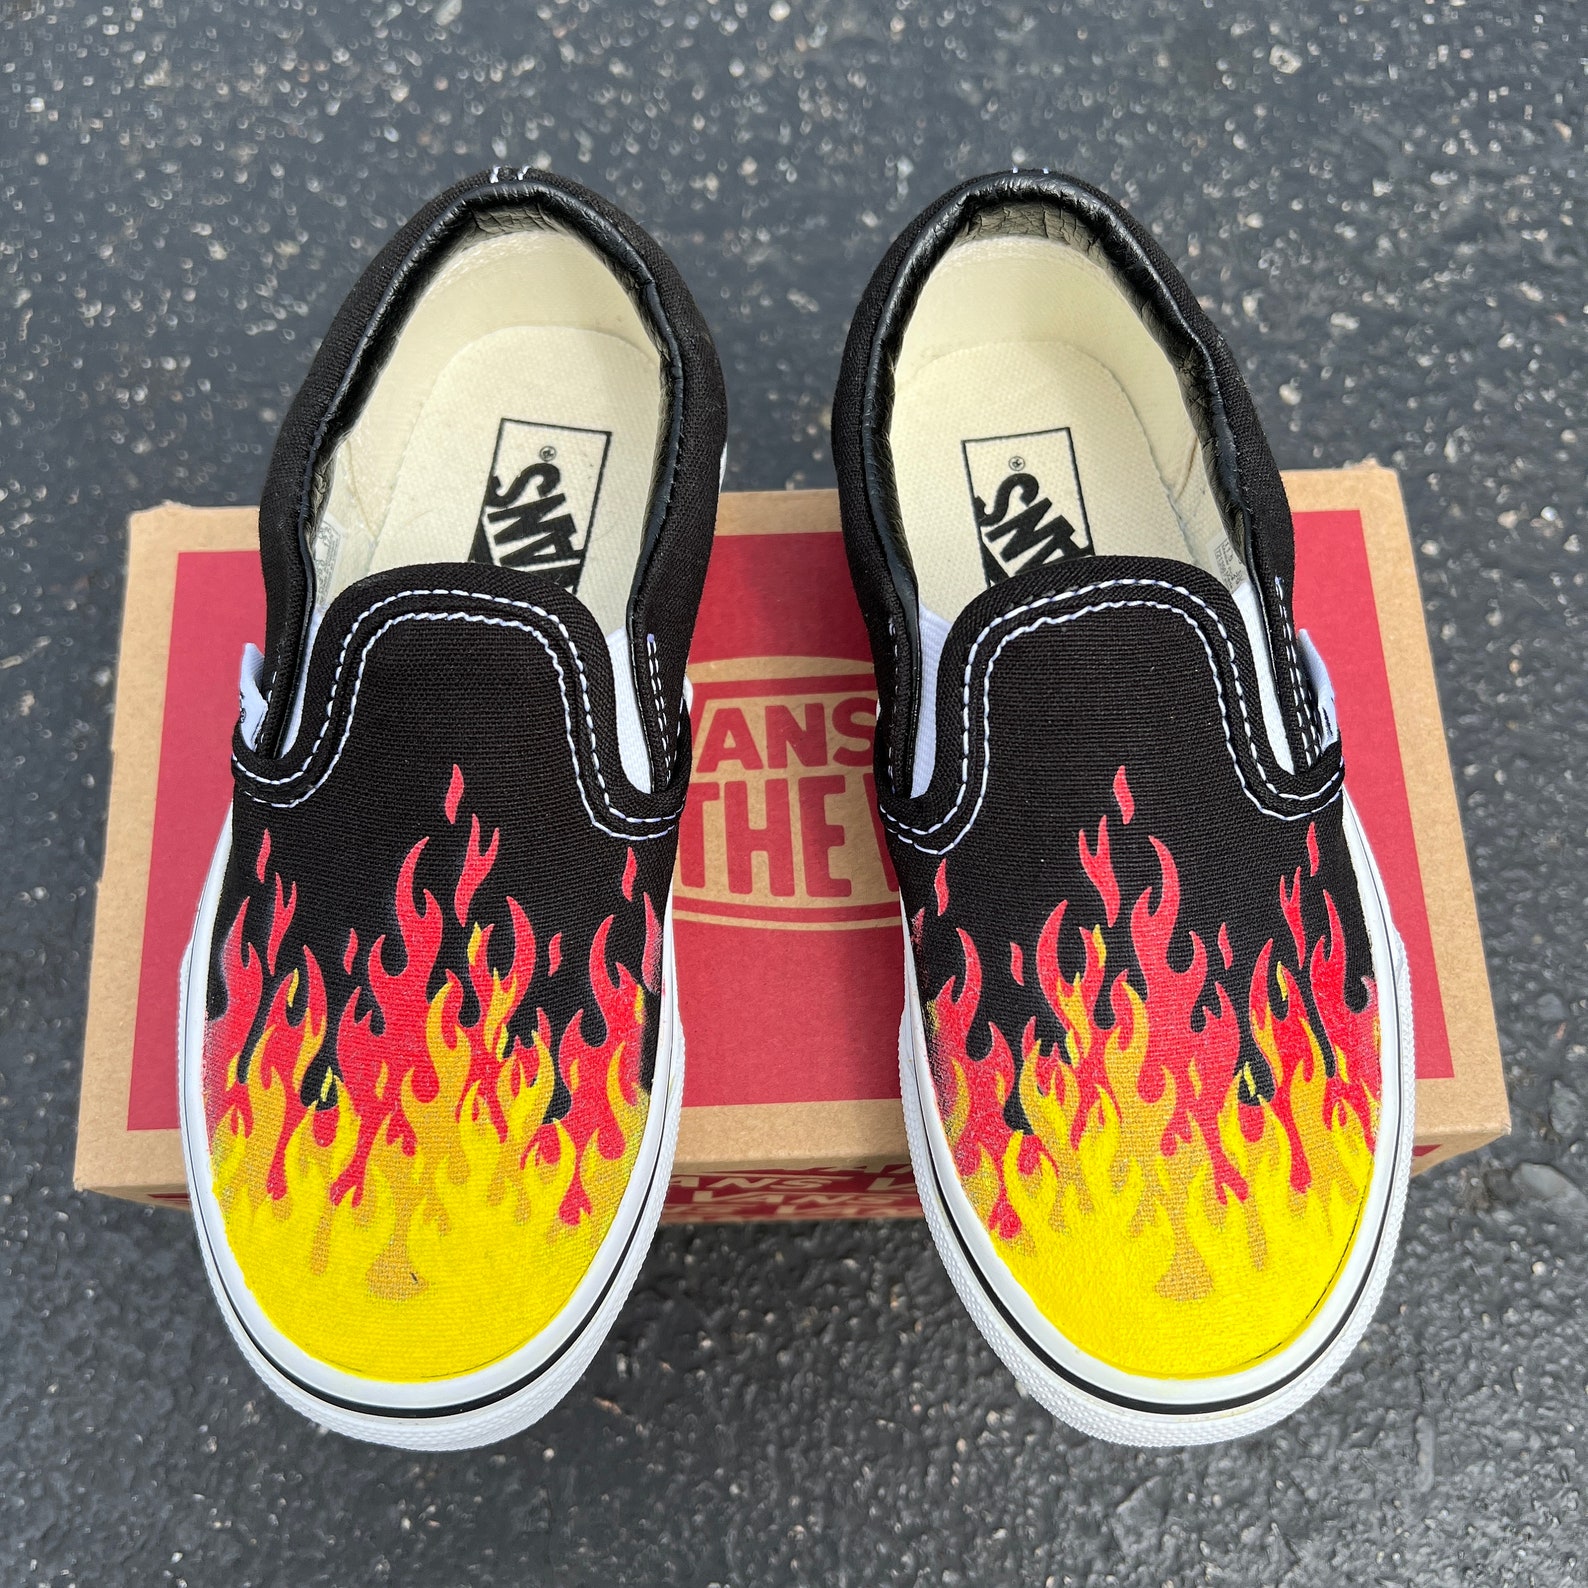 Hot Flame Shoes Custom Vans Black Slip on Red Orange Yellow - Etsy